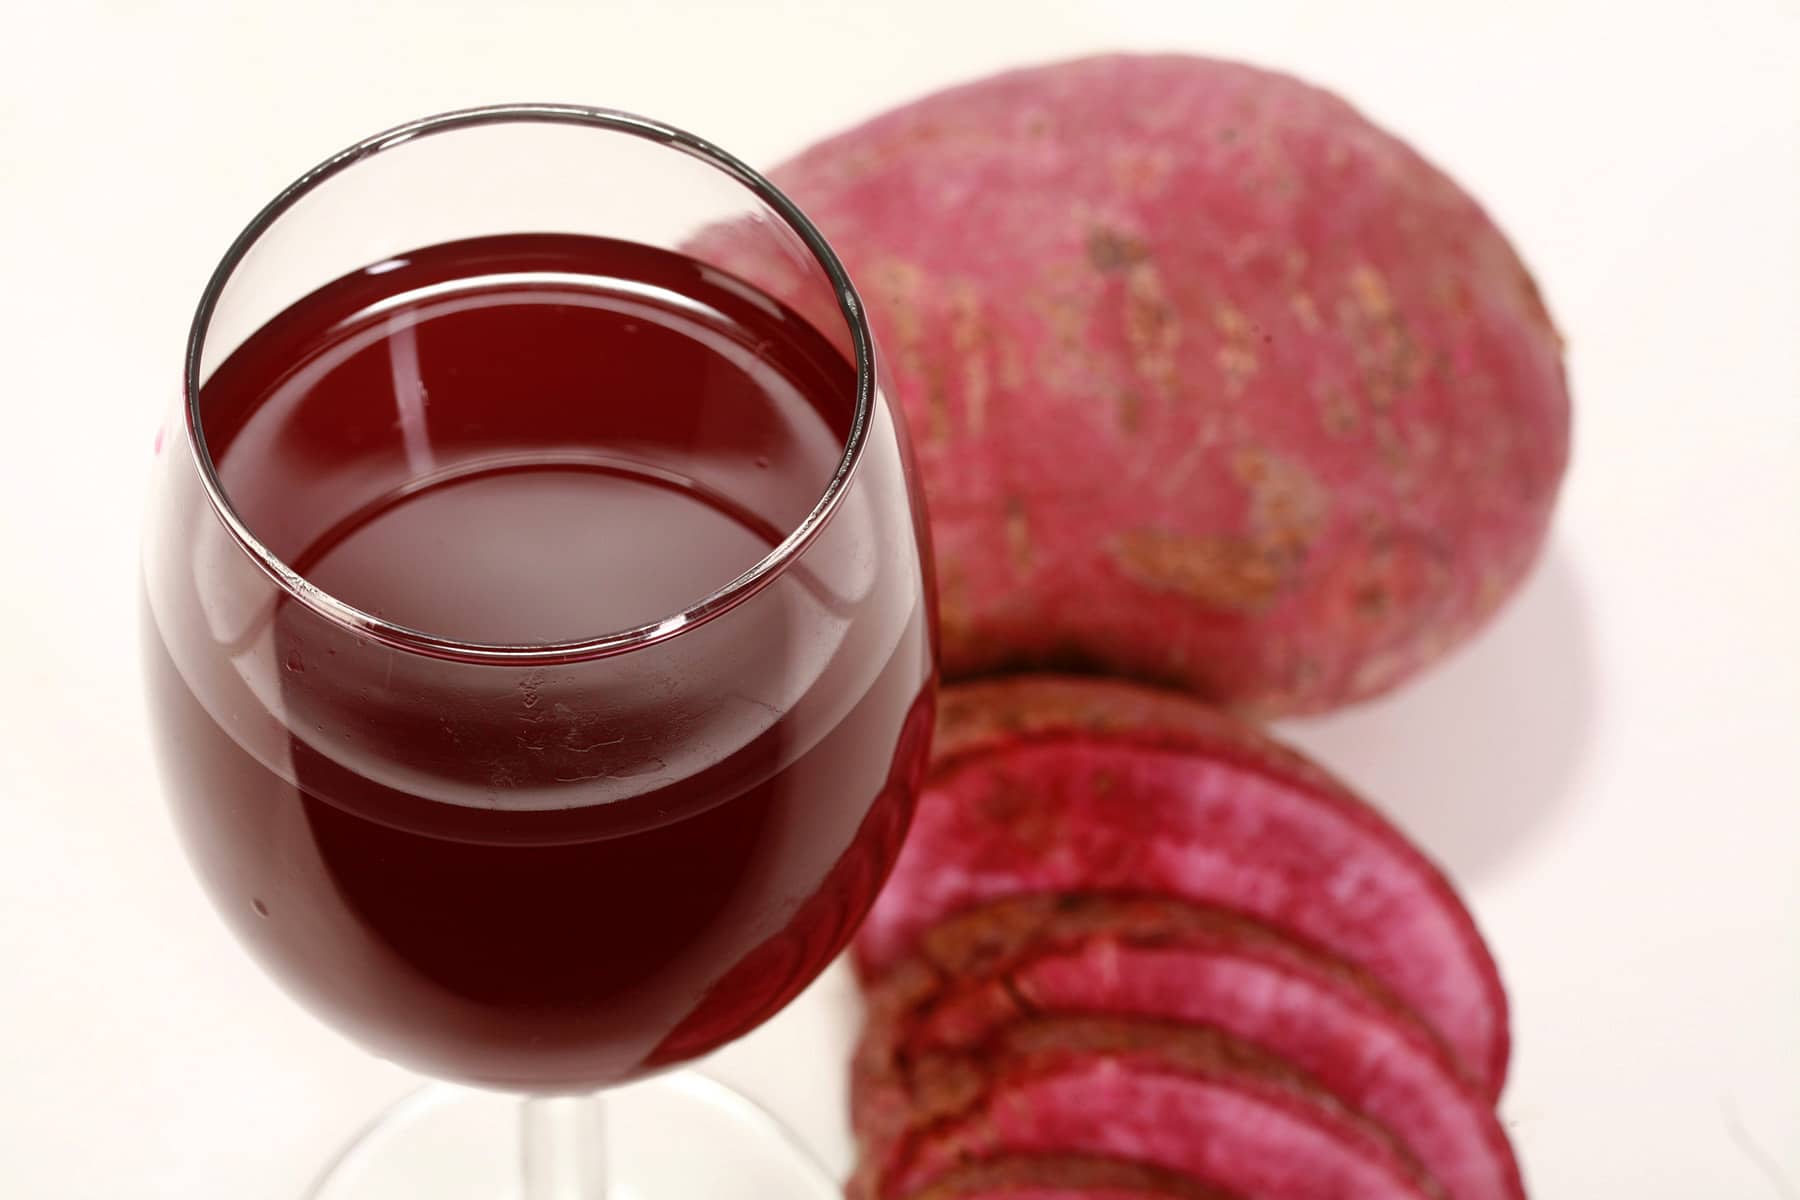 A wine glass with deep purple ube wine, next to a sliced up ube - purple sweet potato.